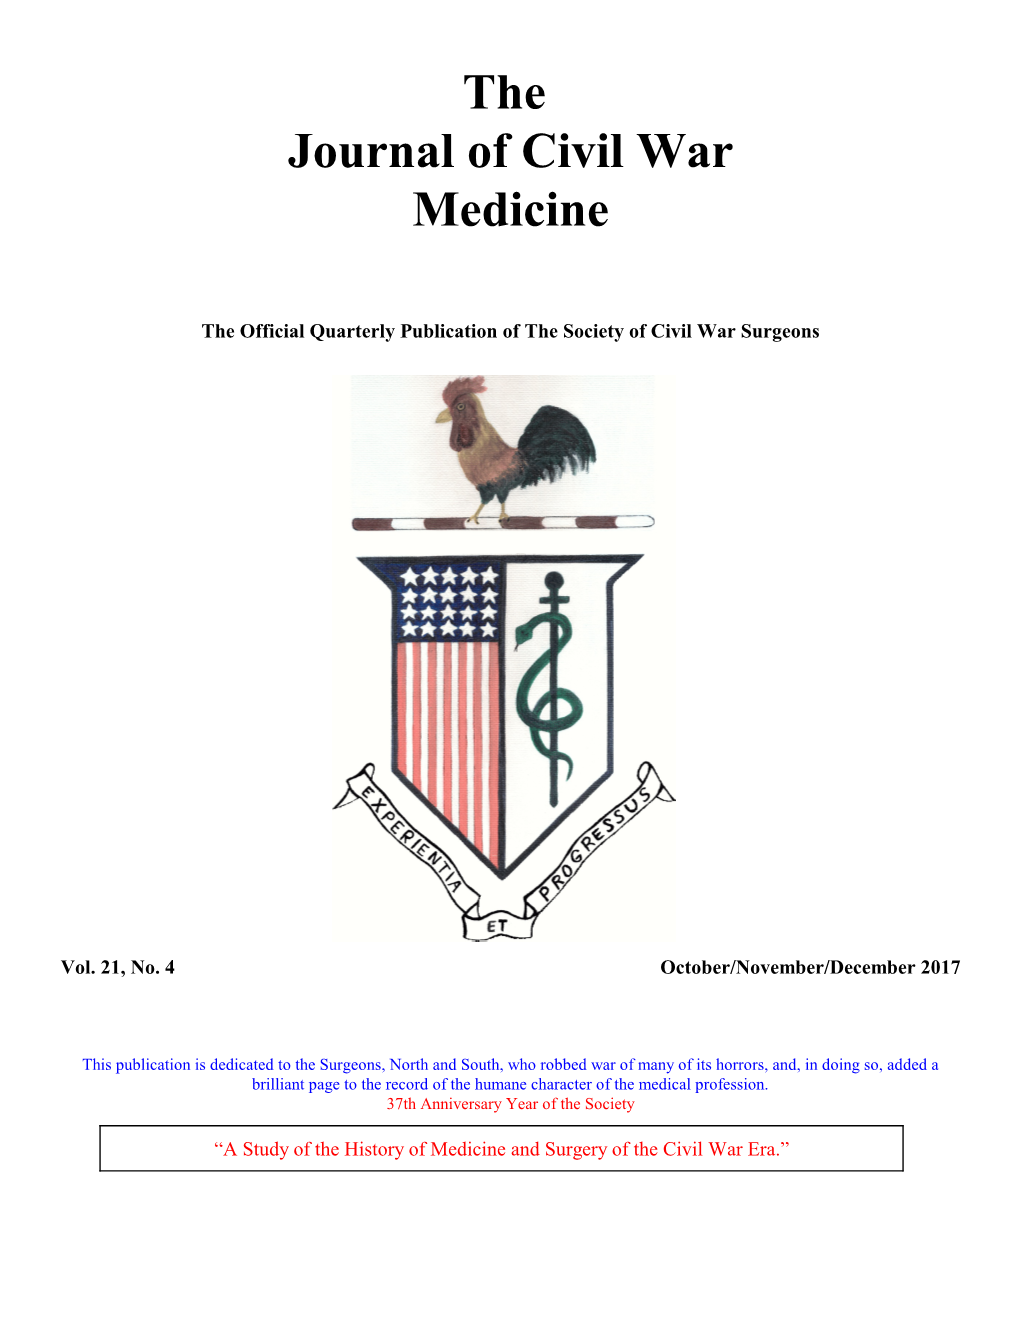 The Journal of Civil War Medicine